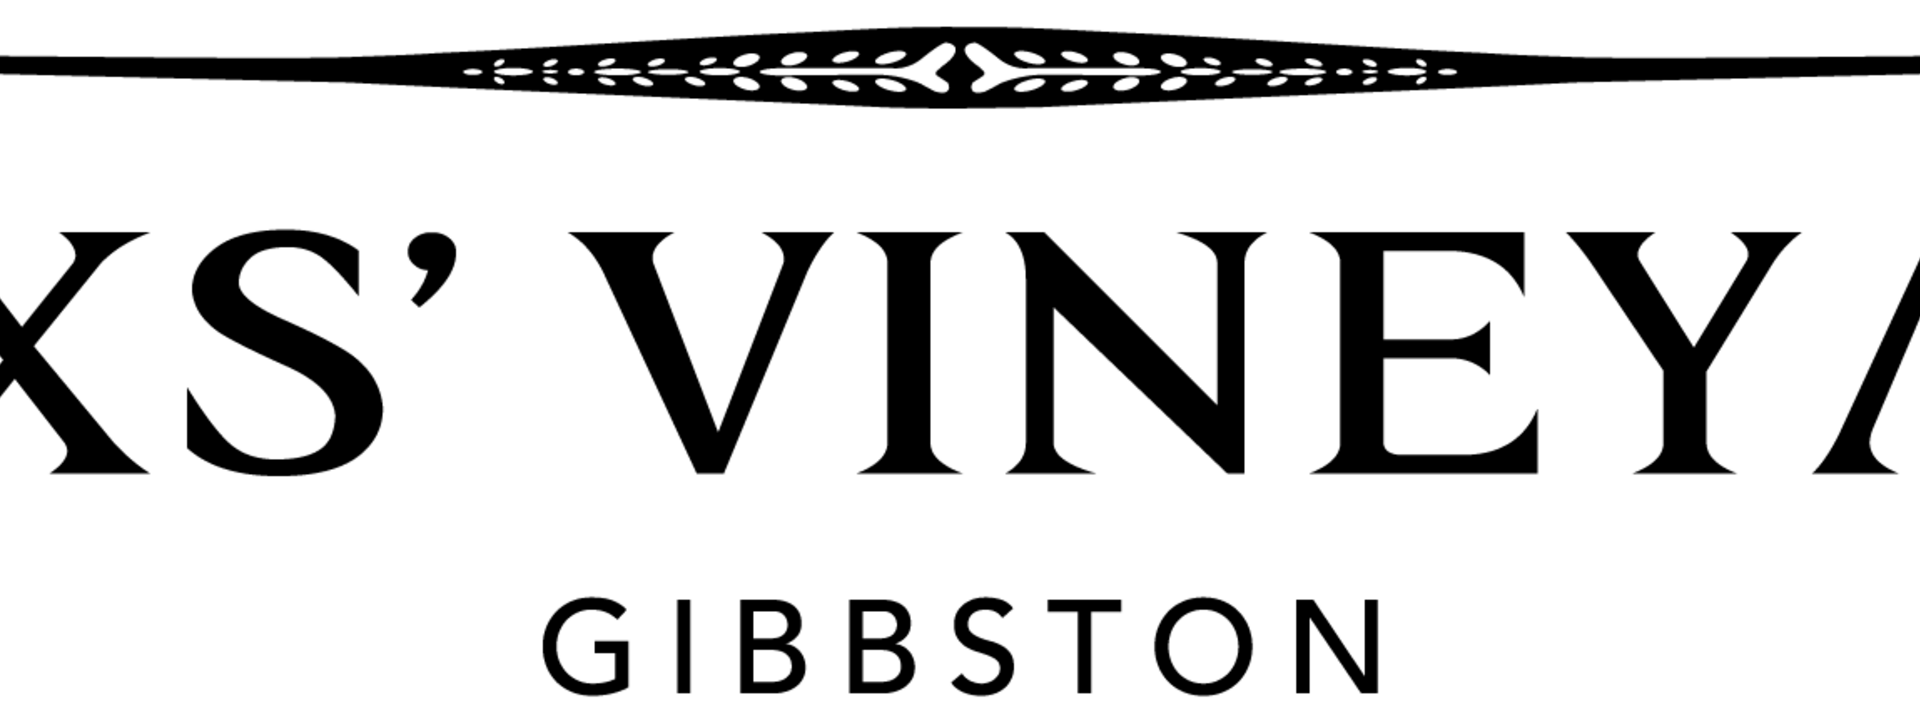 cv-final-logomark-black.png